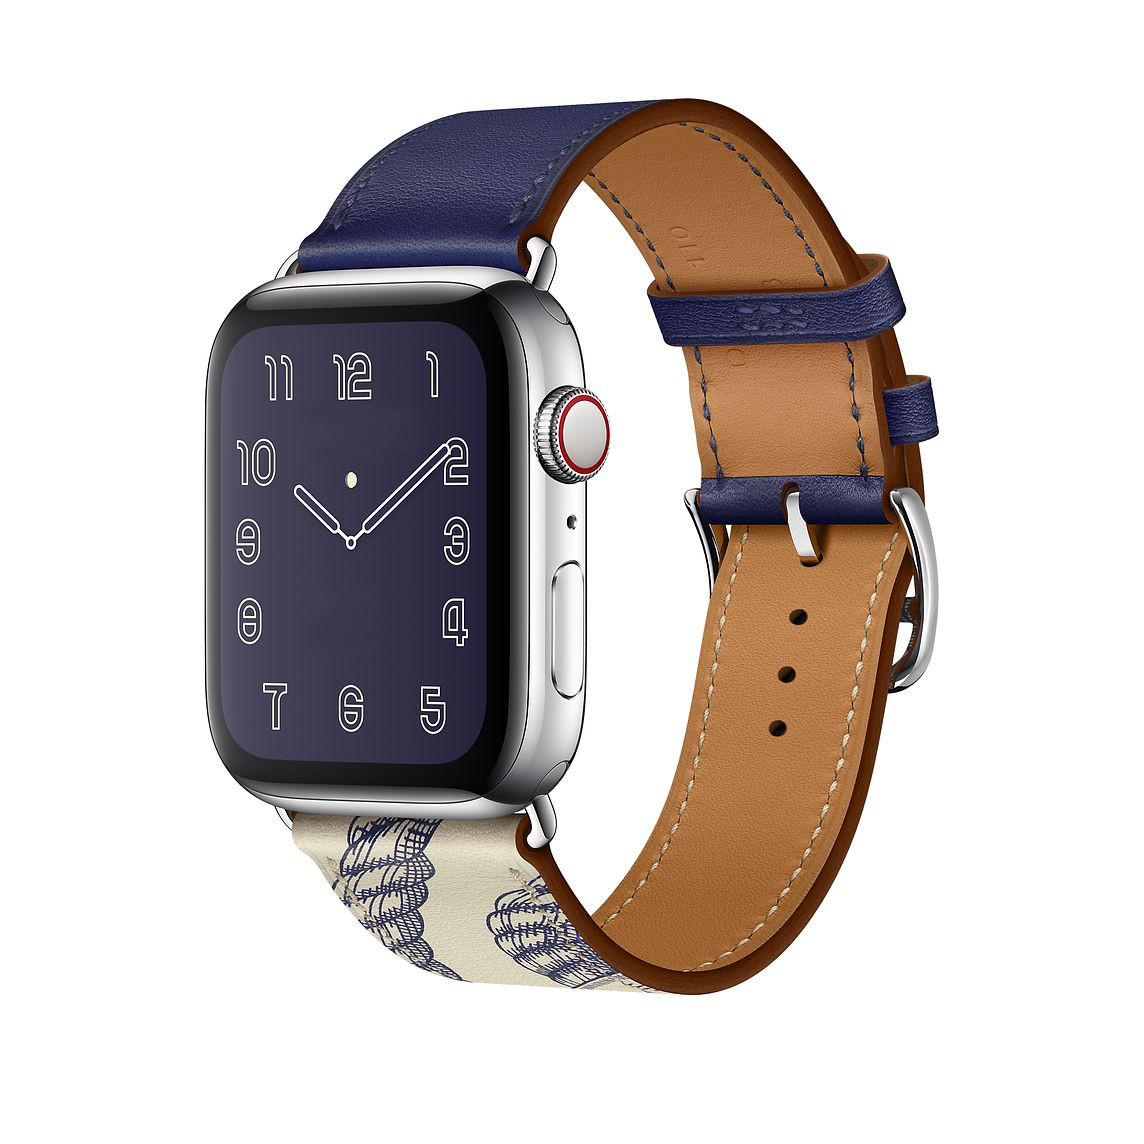 Řemínek iMore Single Tour Apple Watch Series 3/2/1 (38mm) - Inkoust/Beton